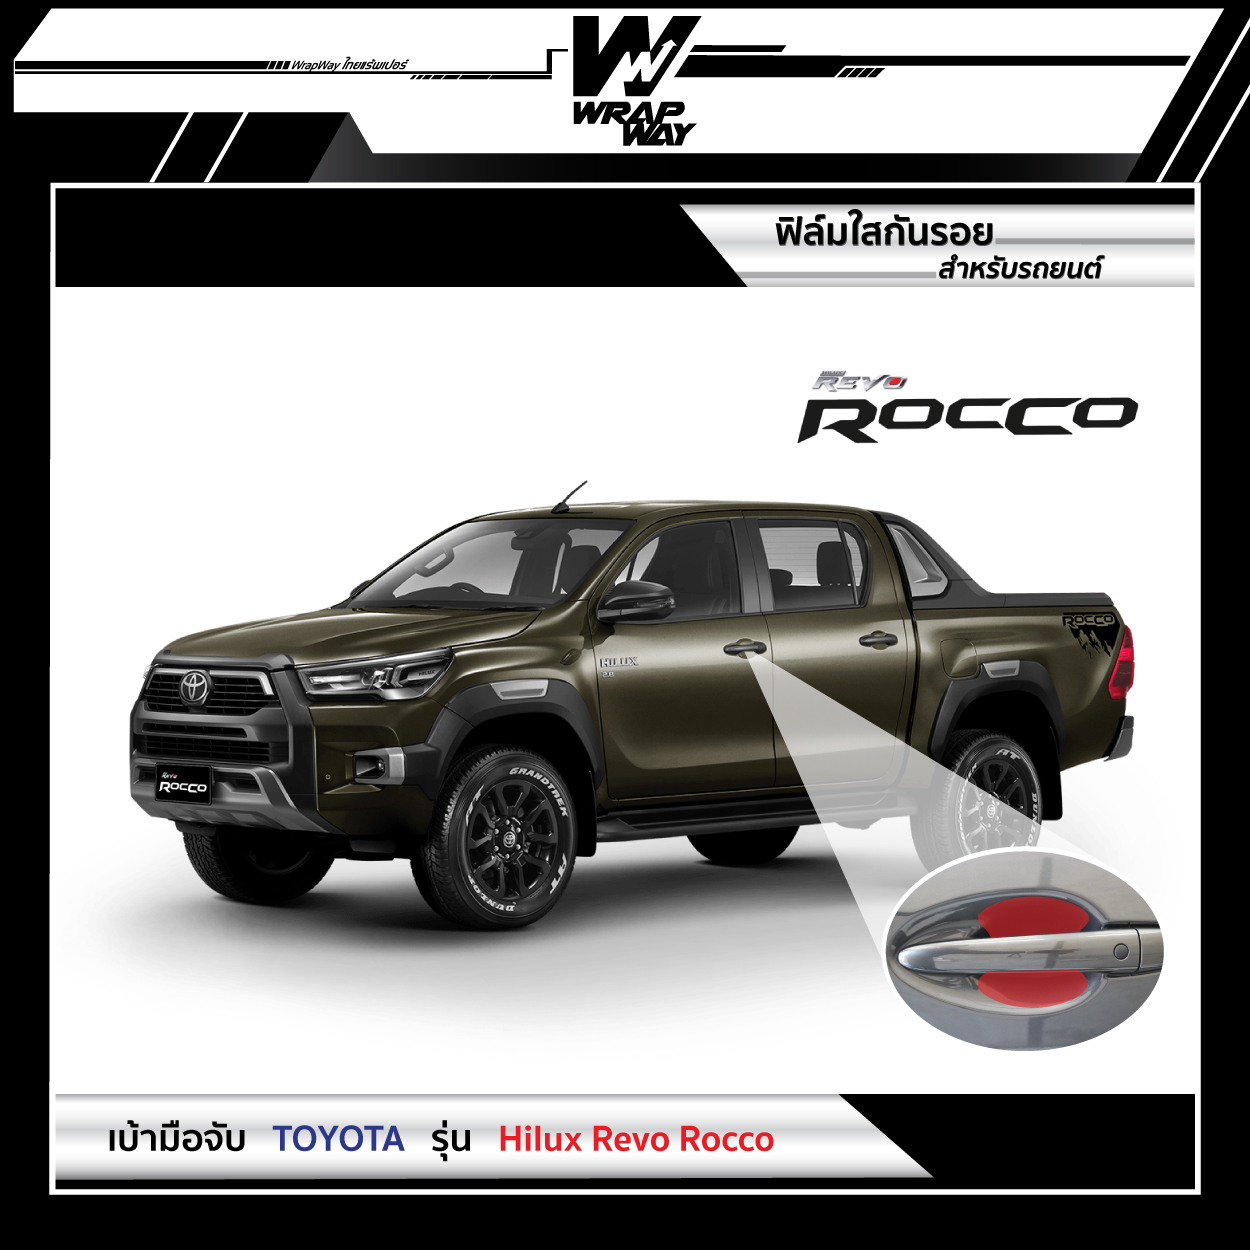 E Voucher การติดตั้งฟิล์มใสกันรอย เบ้ามือจับ Toyota Hilux Revo Rocco 2021 จาก WrapWay